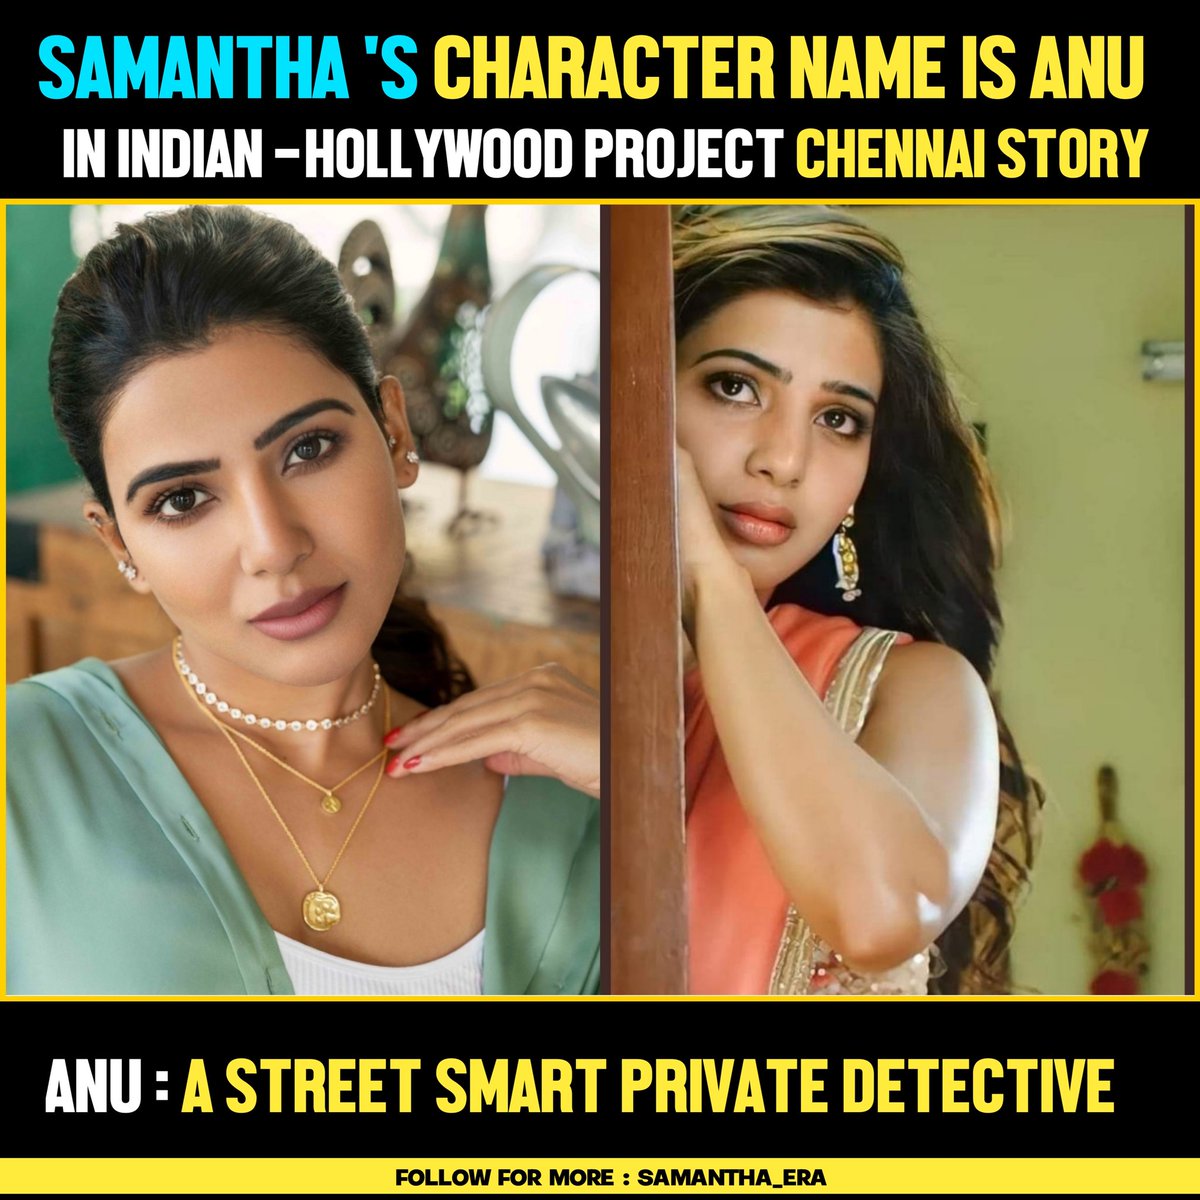 Then : Anusuya 😍
Now : Anu in #ChennaiStory ❤️
The Indian -HOLLYWOOD PROJECT 💛

@Samanthaprabhu2 
#SamanthaRuthPrabhu #samantha